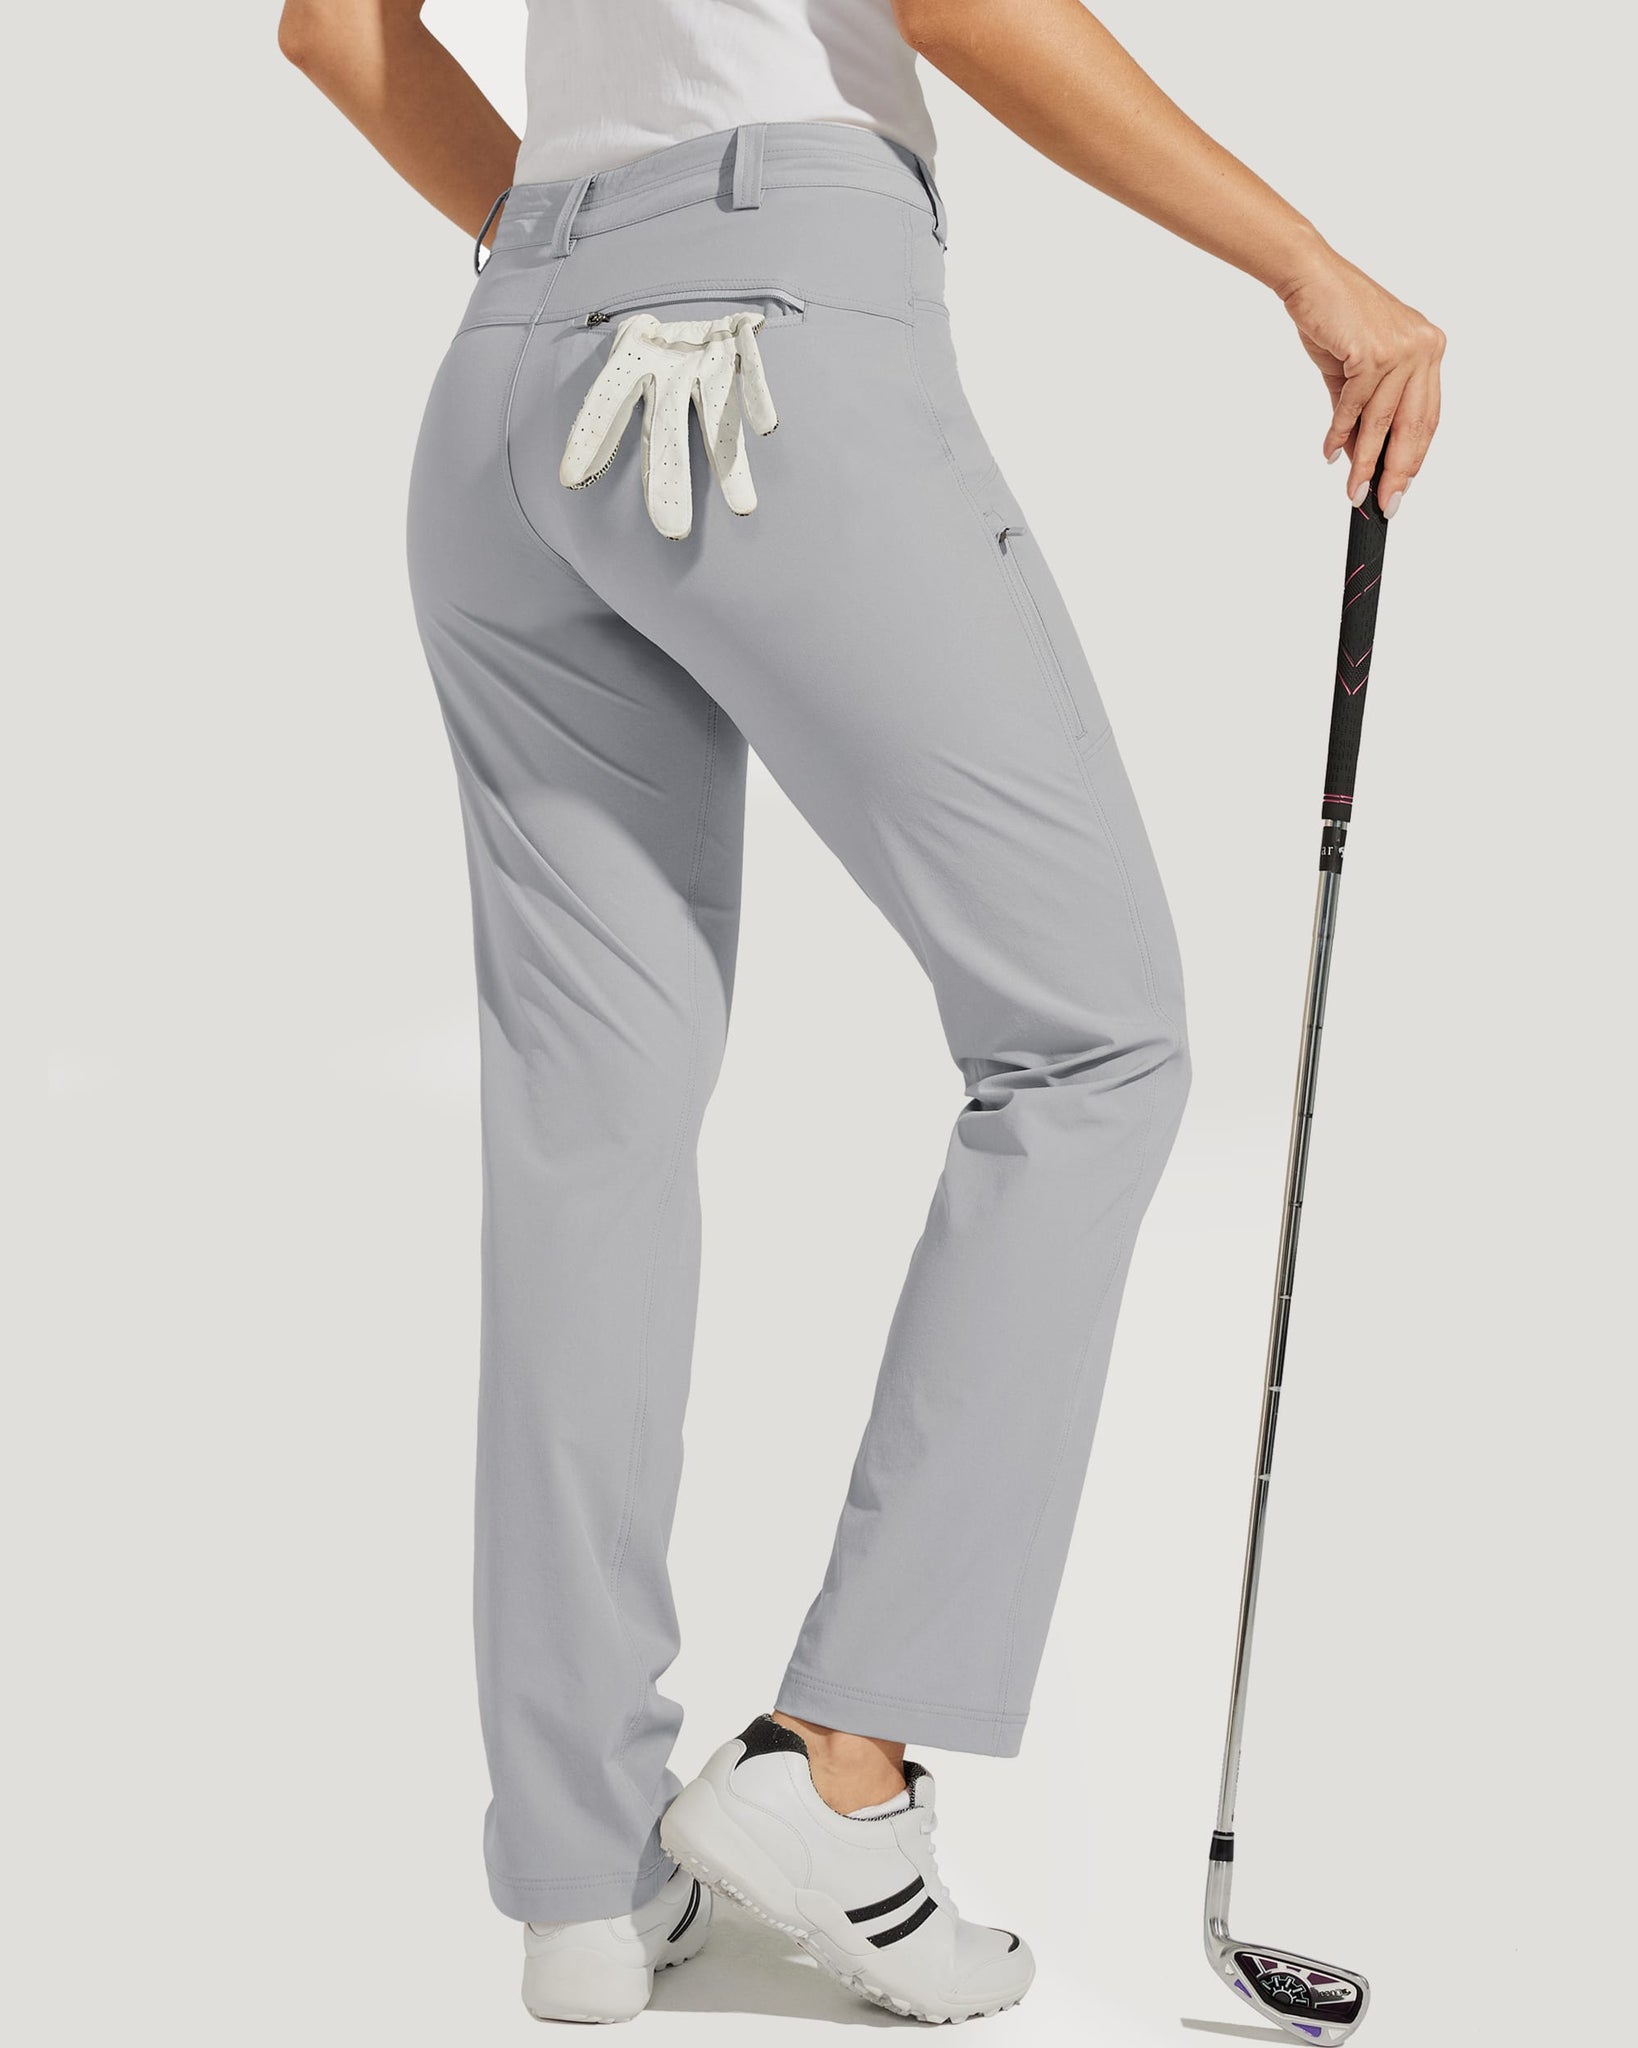 Women's Stretch Athletic Pants_Gray_model3